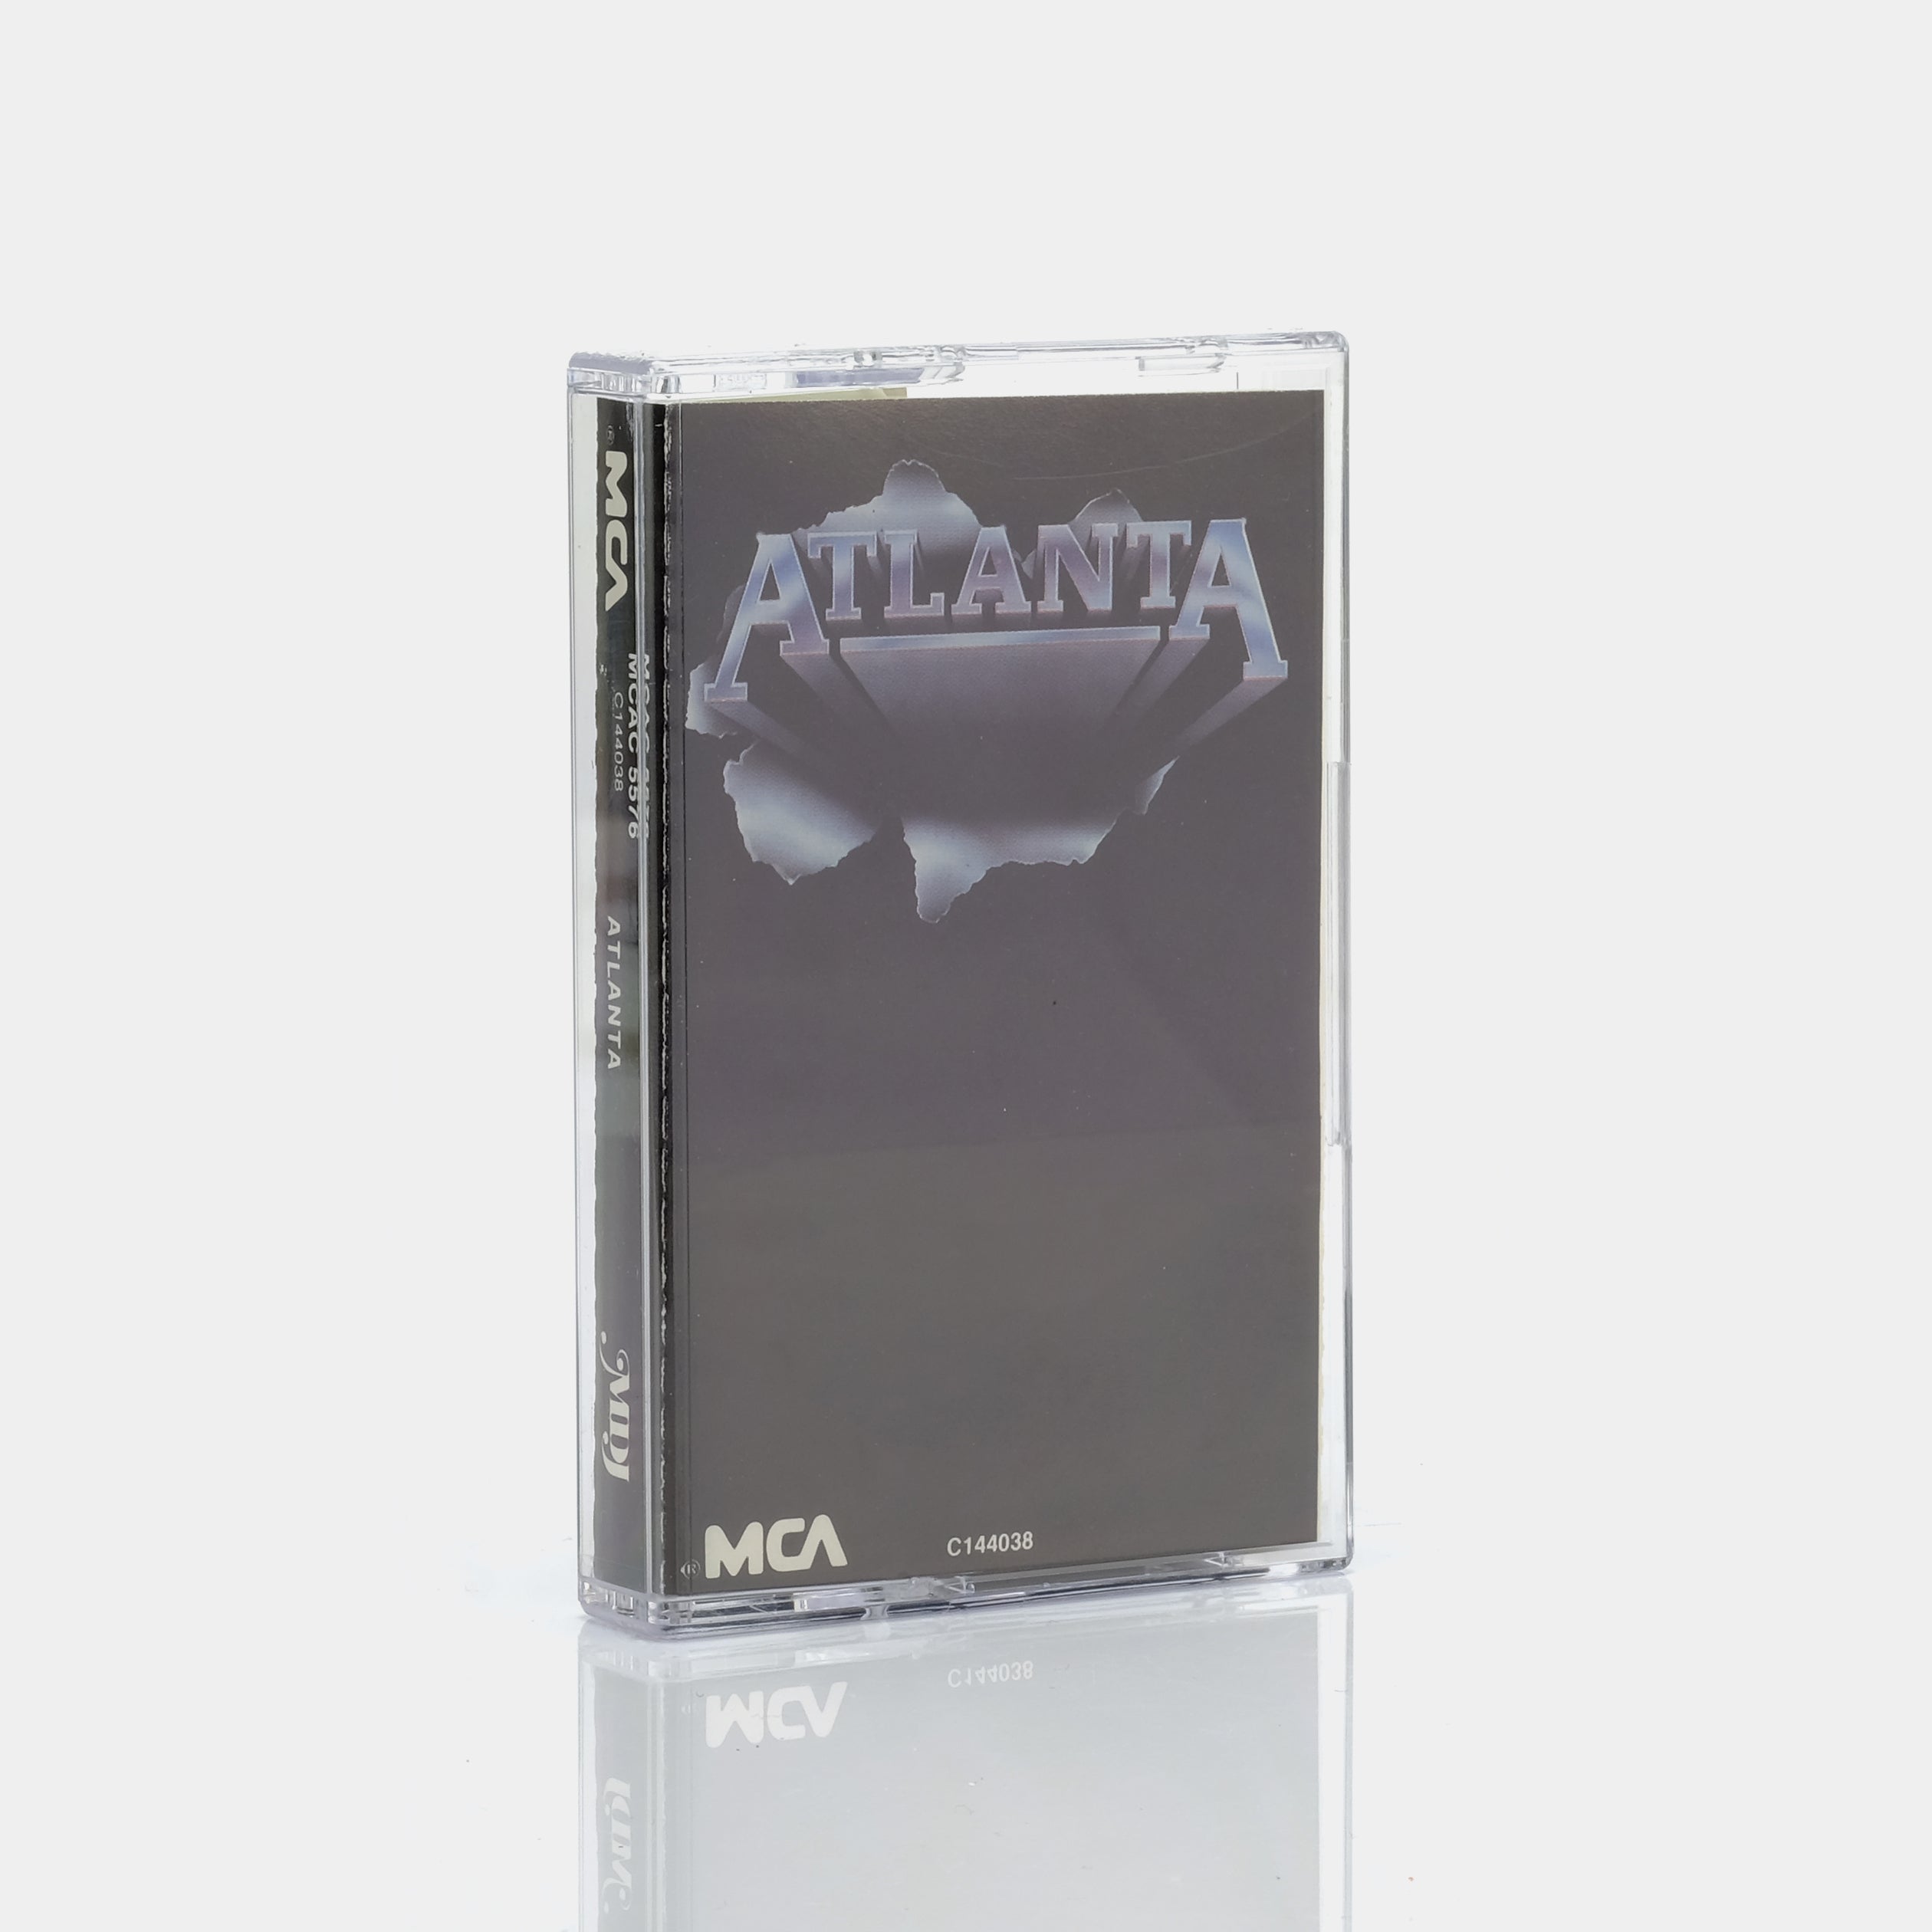 Atlanta - Atlanta Cassette Tape